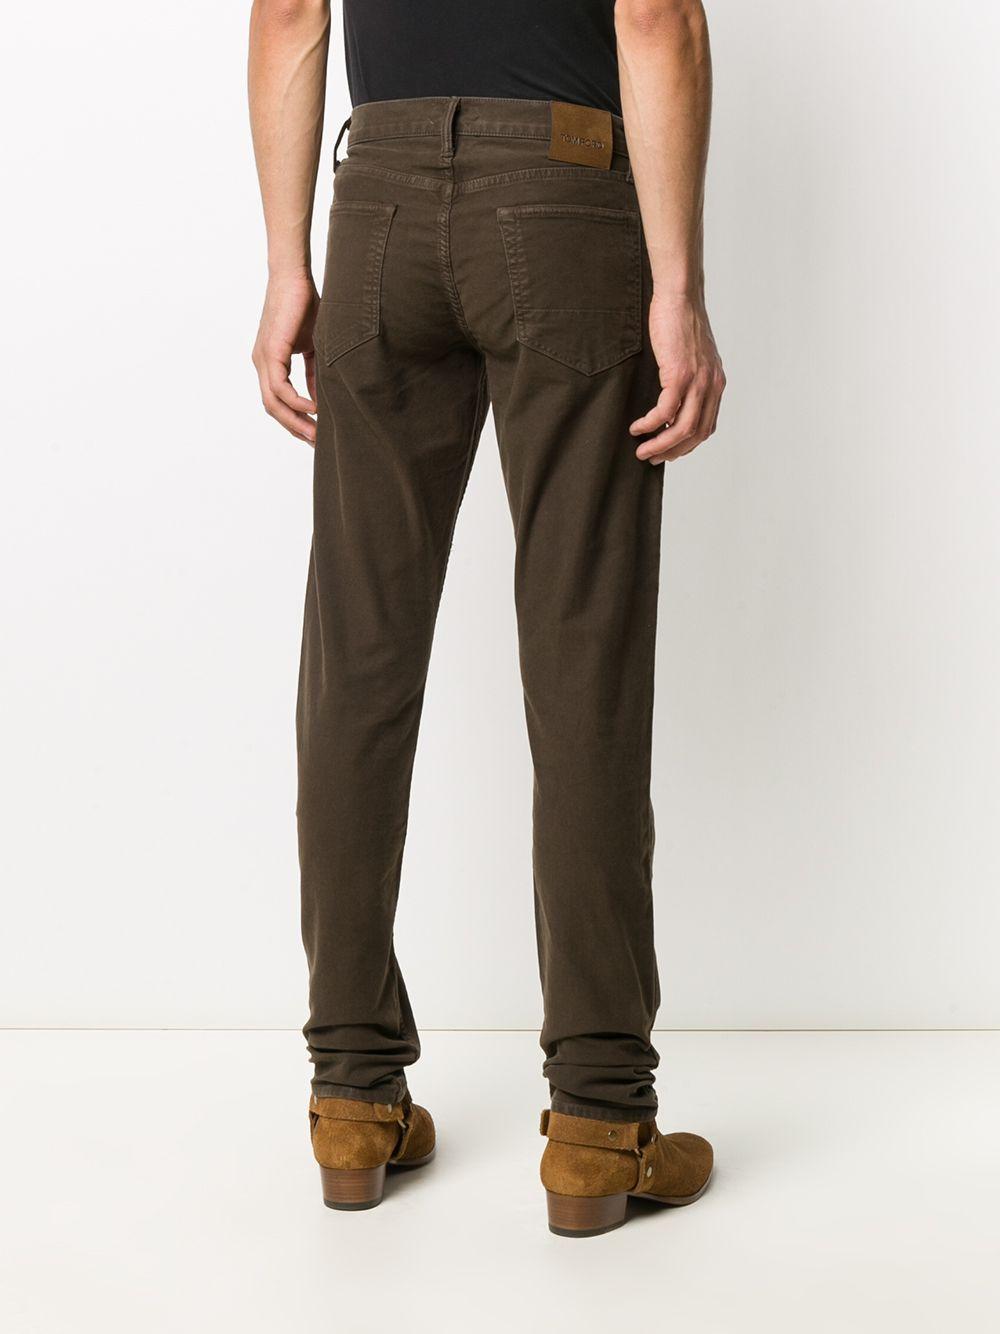 Tom Ford Denim Mid-rise Straight-leg Jeans in Brown for Men - Lyst